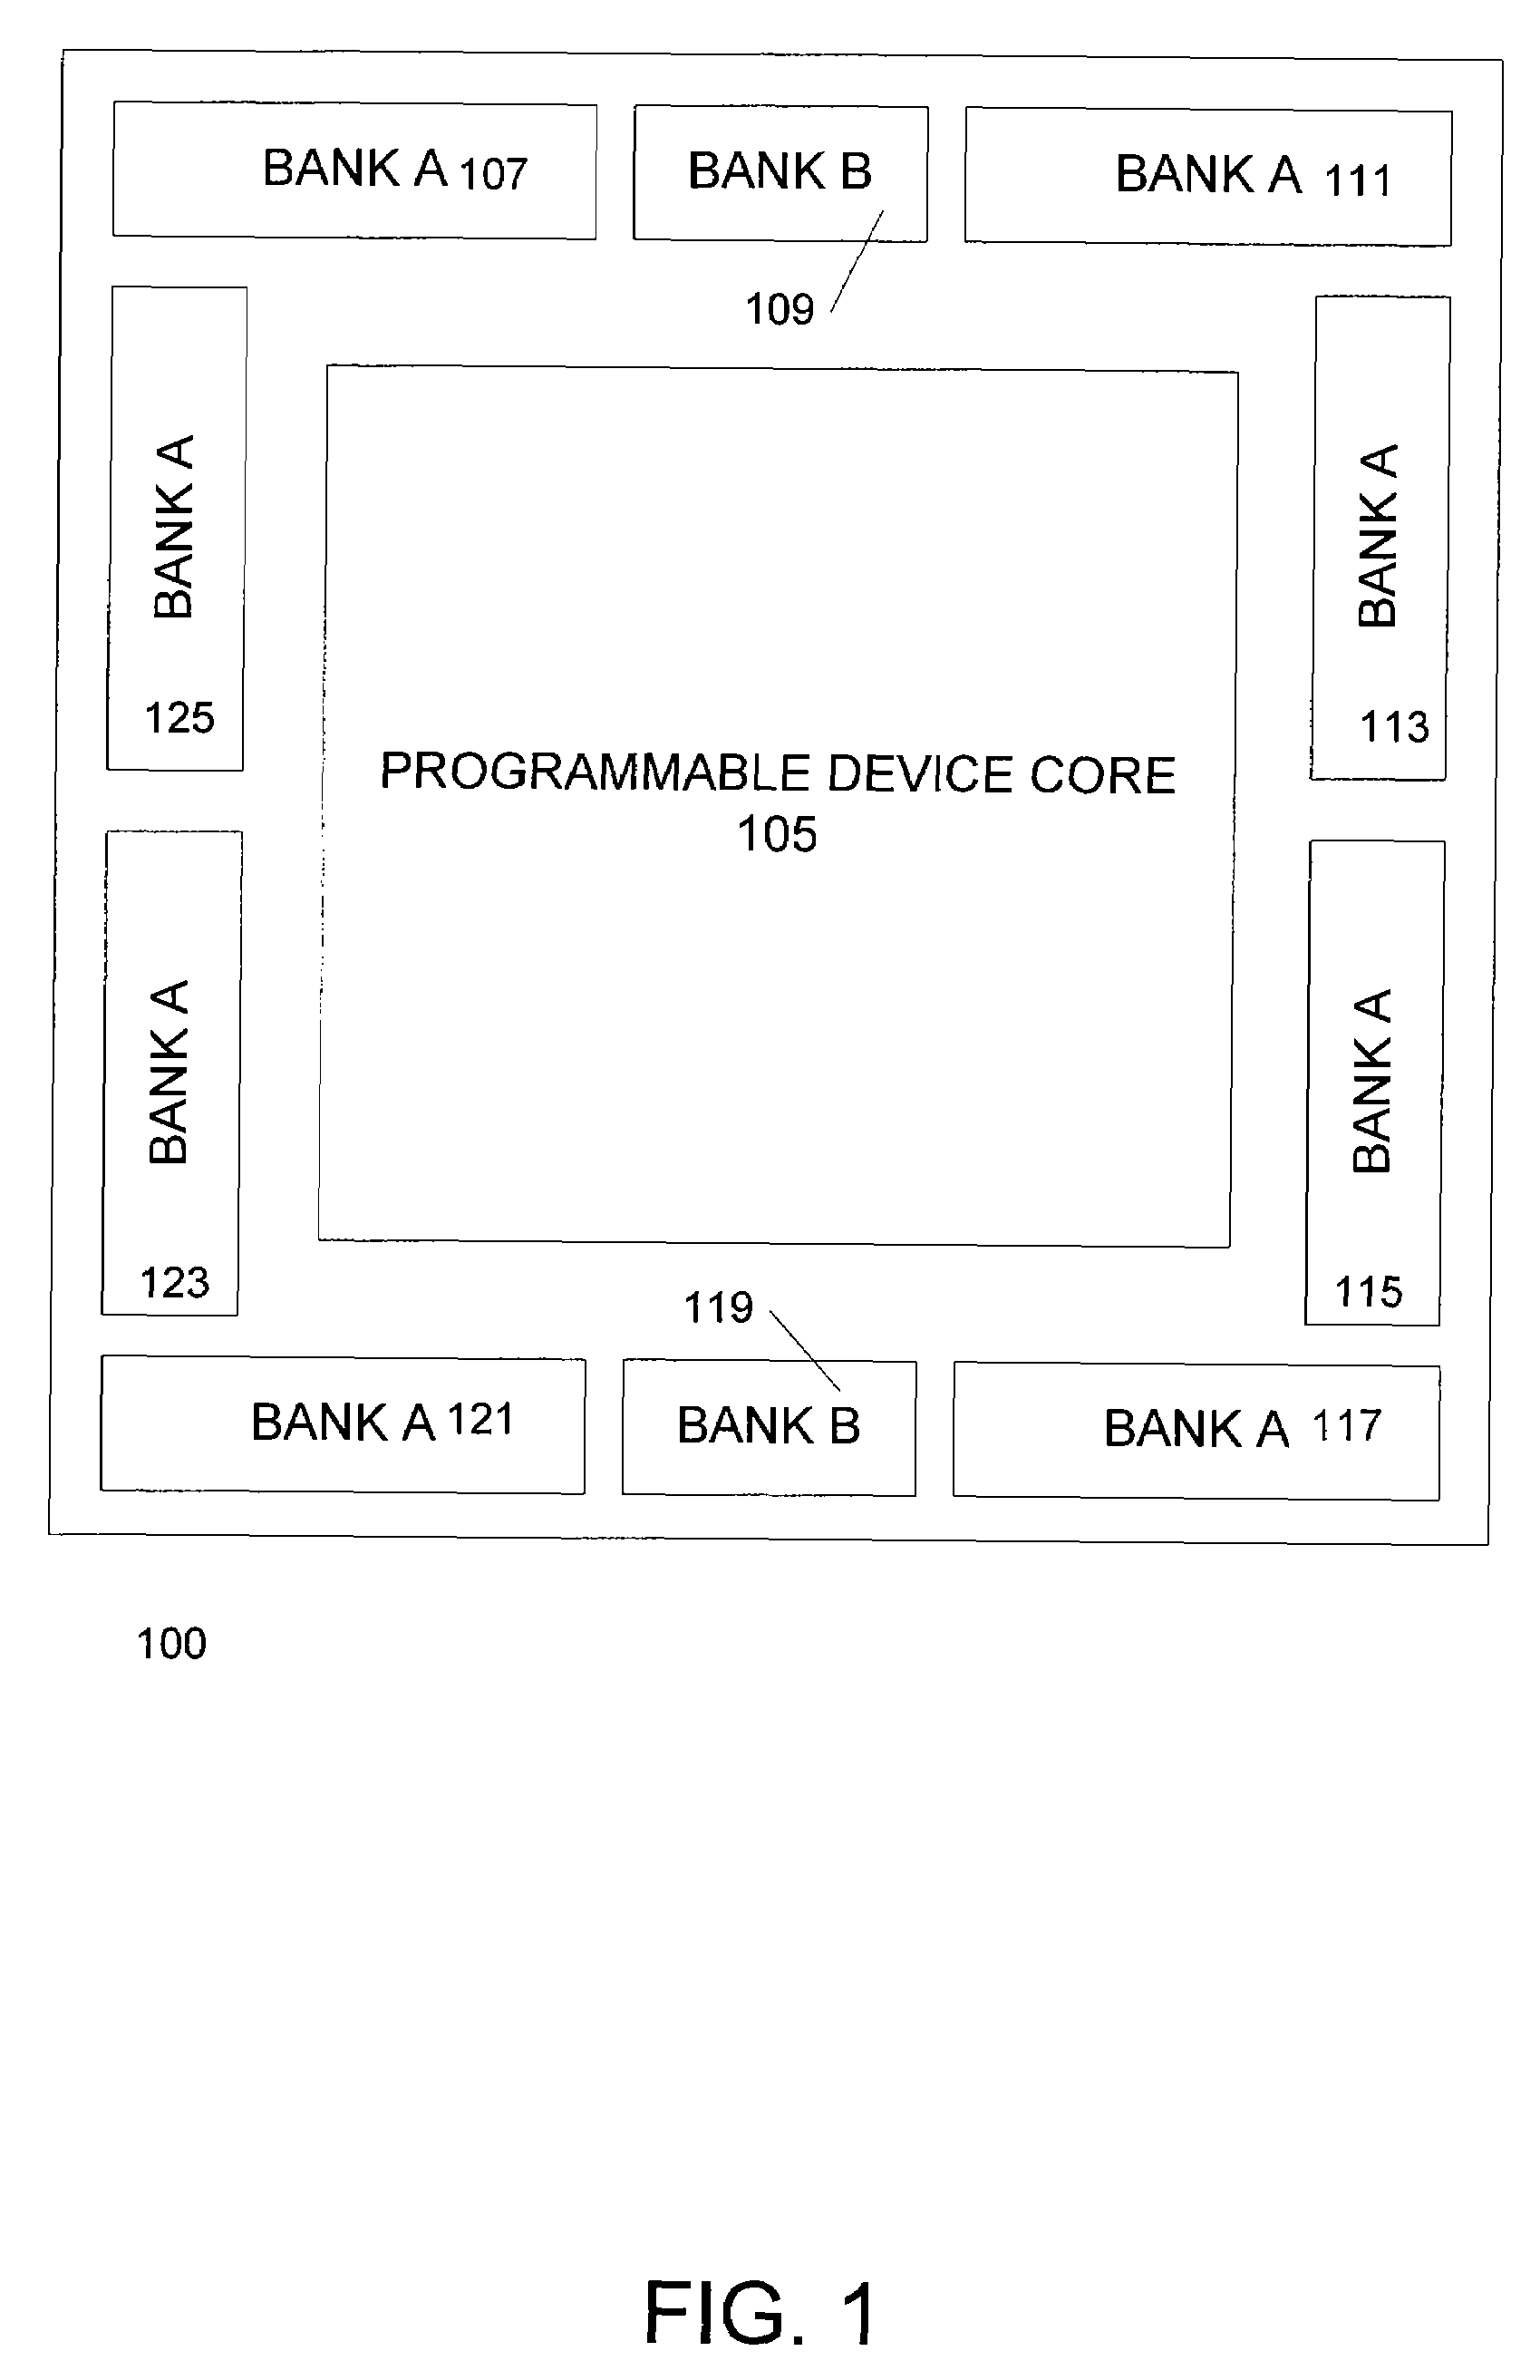 Modular I/O bank architecture